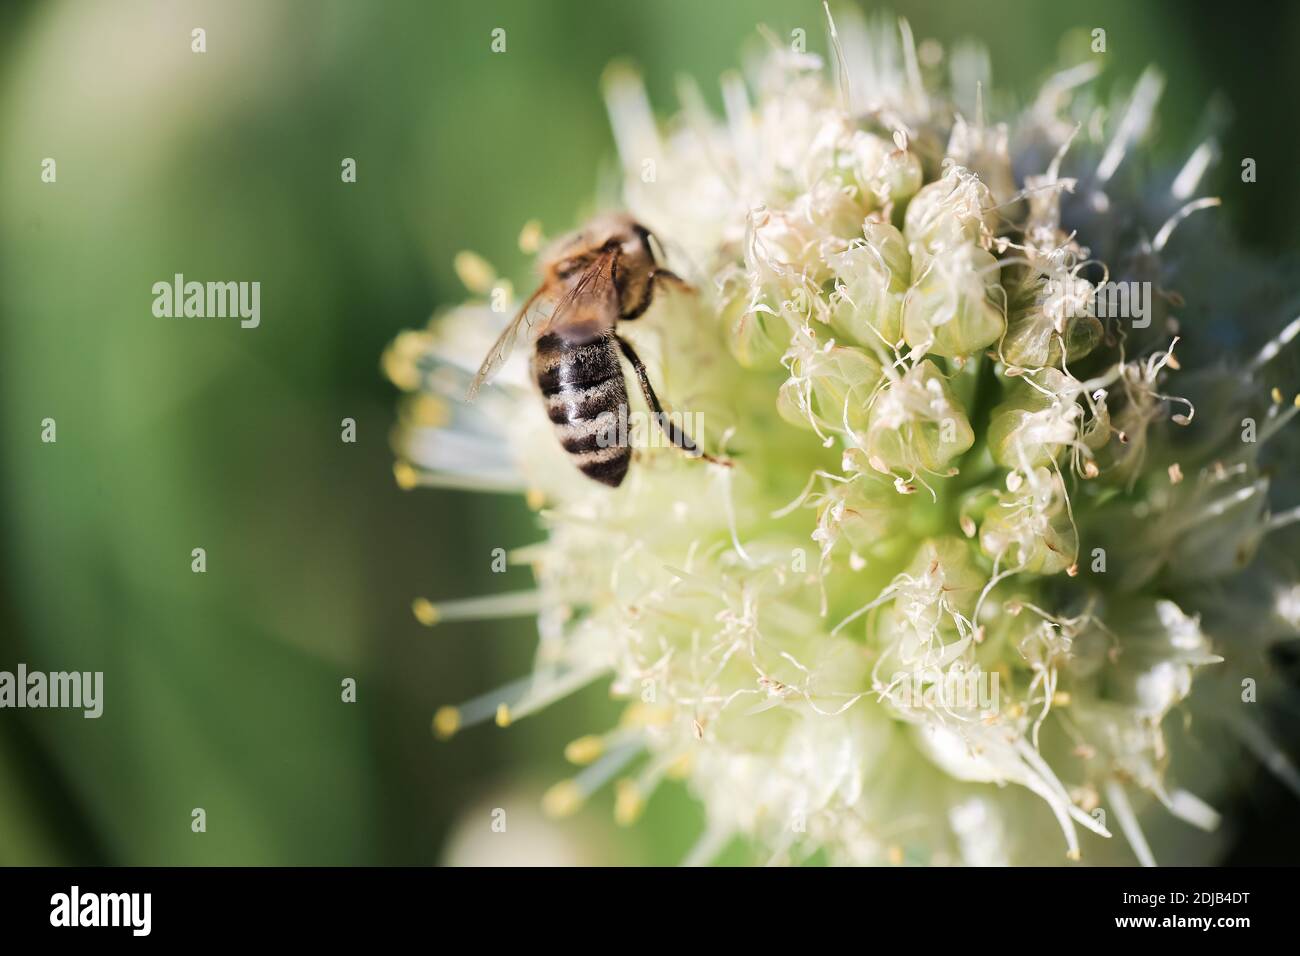 Summer background with blooming white Alium and honeybee Stock Photo